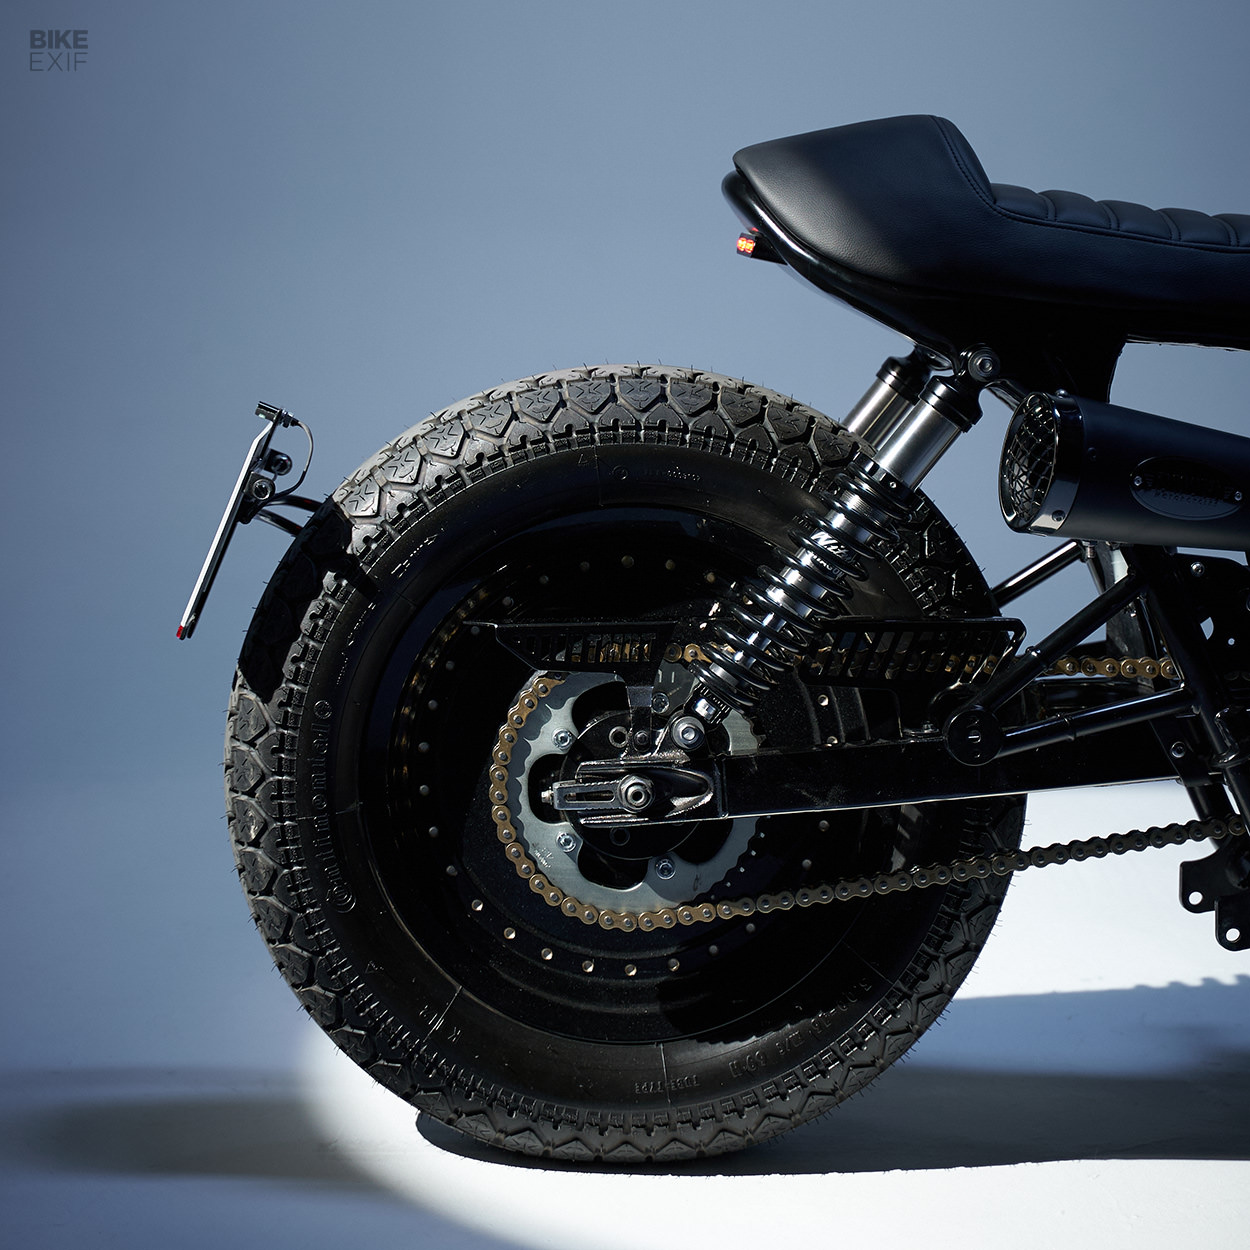 Custom Triumph Bonneville T100 by Tamarit Motorcycles